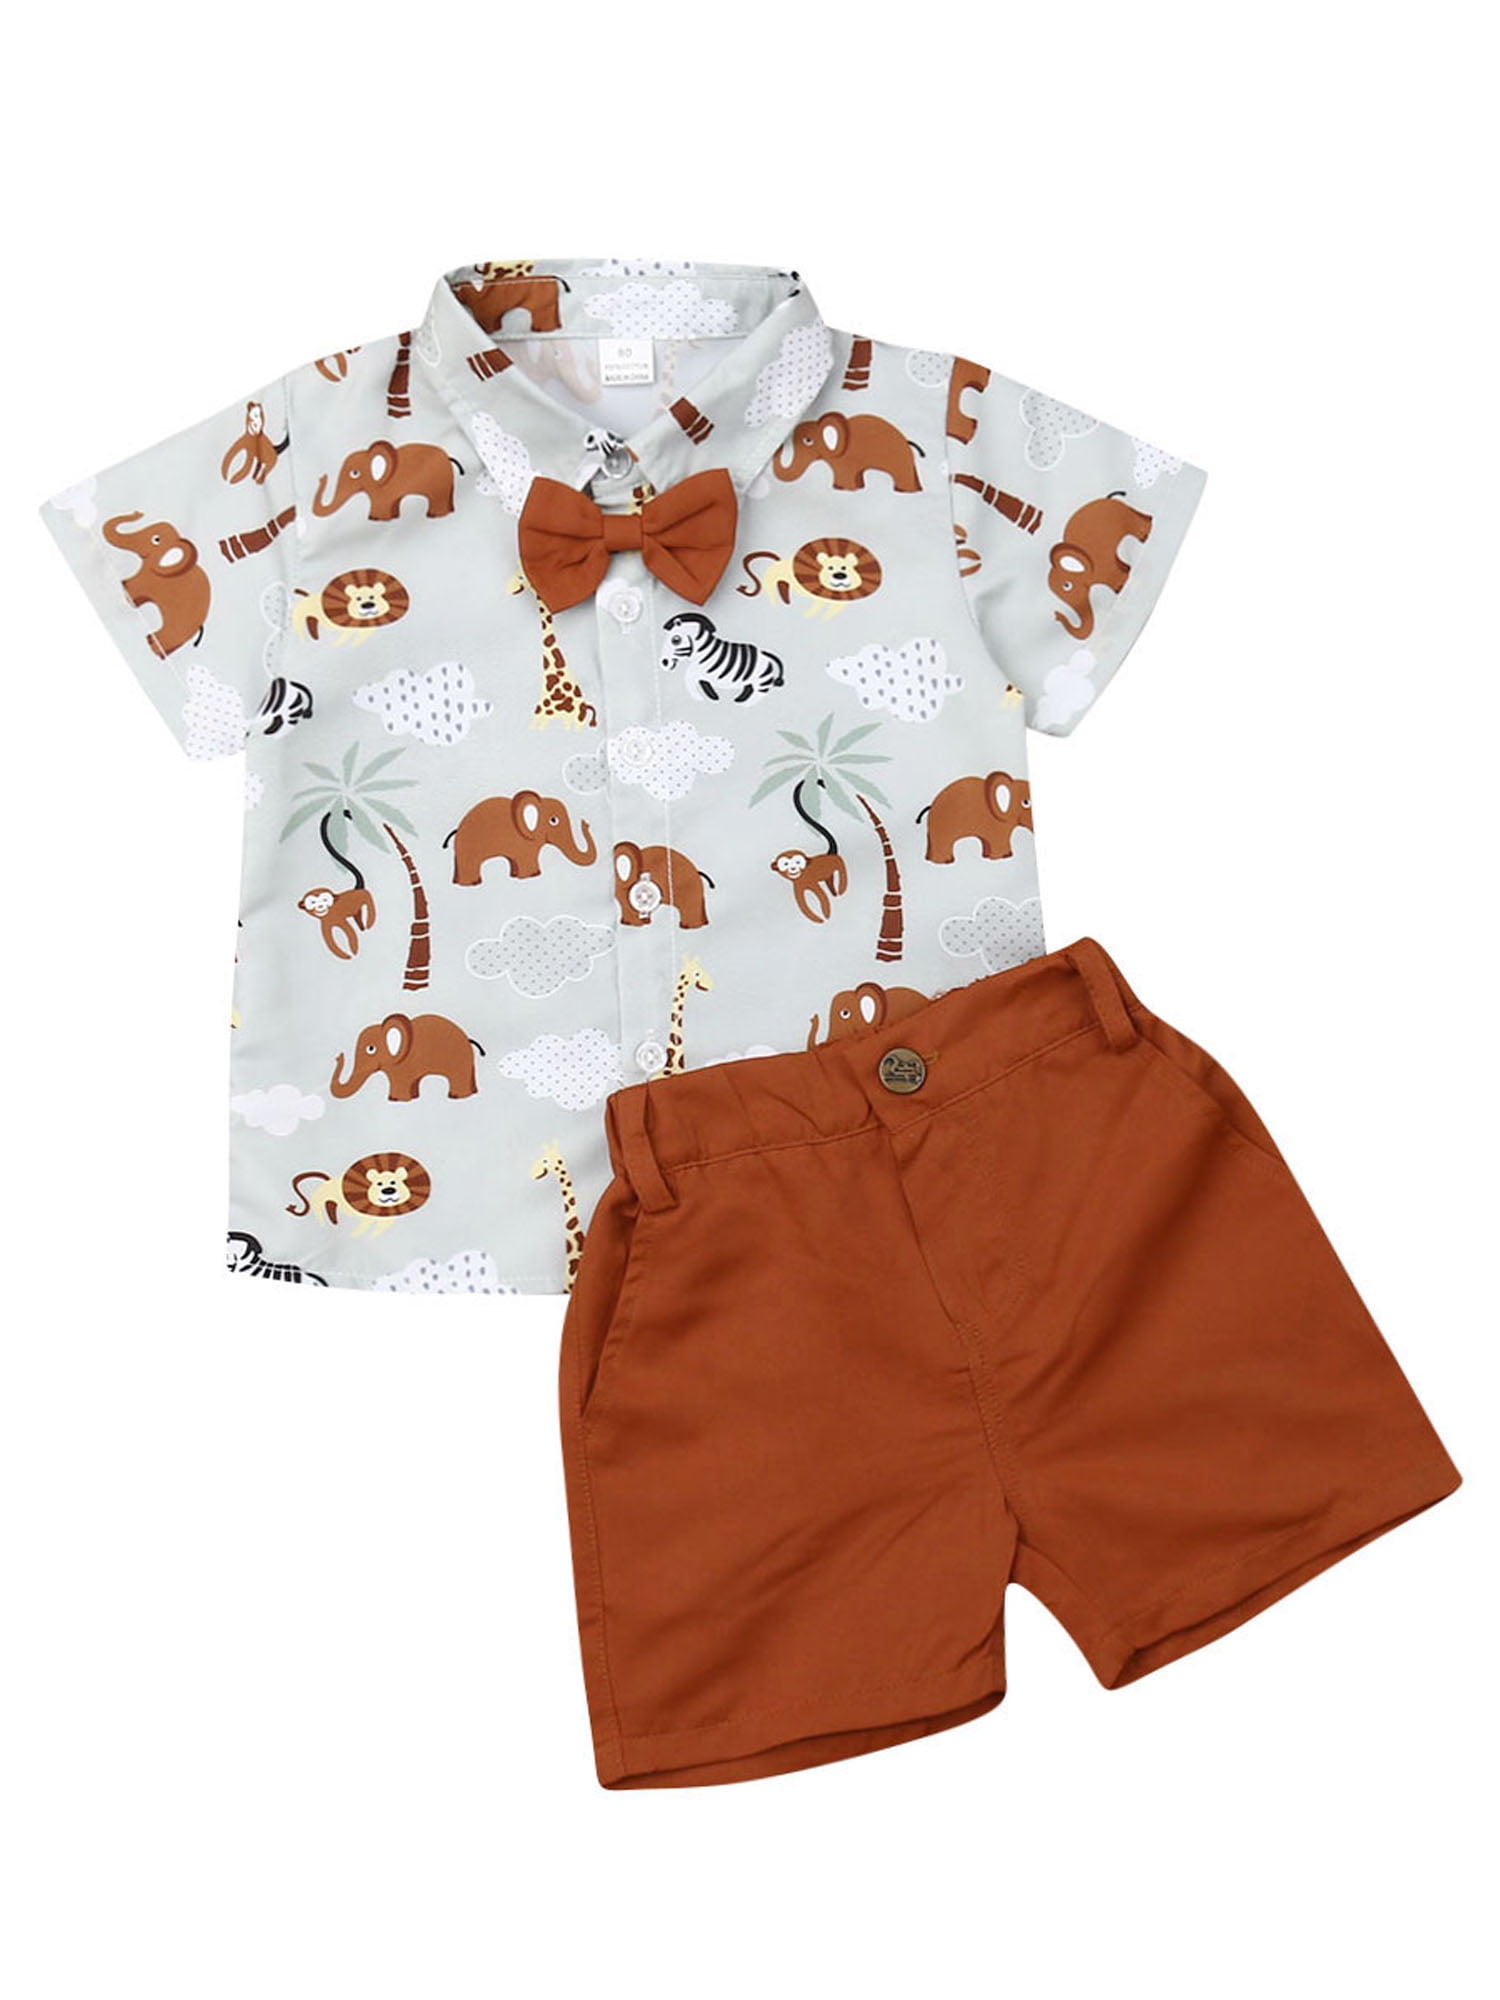 US Toddler Kid Baby Boy Clothes T-shirt Top Shirt Shorts Pants Animal Outfit Set 